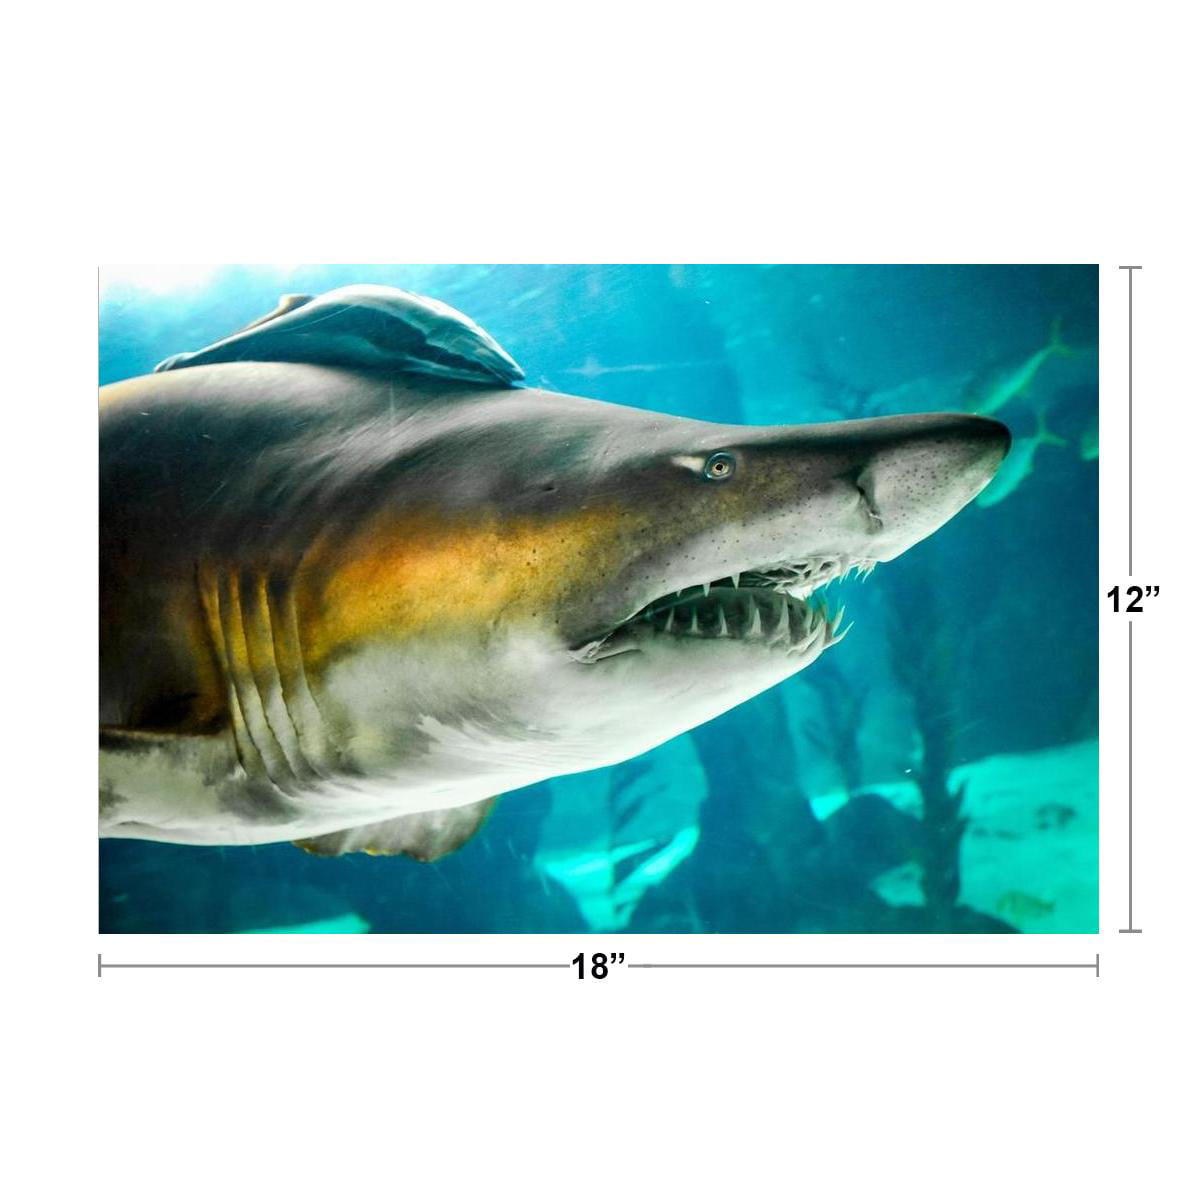 Sand Tiger Shark Up Close Photo Art Print Poster 24x36 inch 